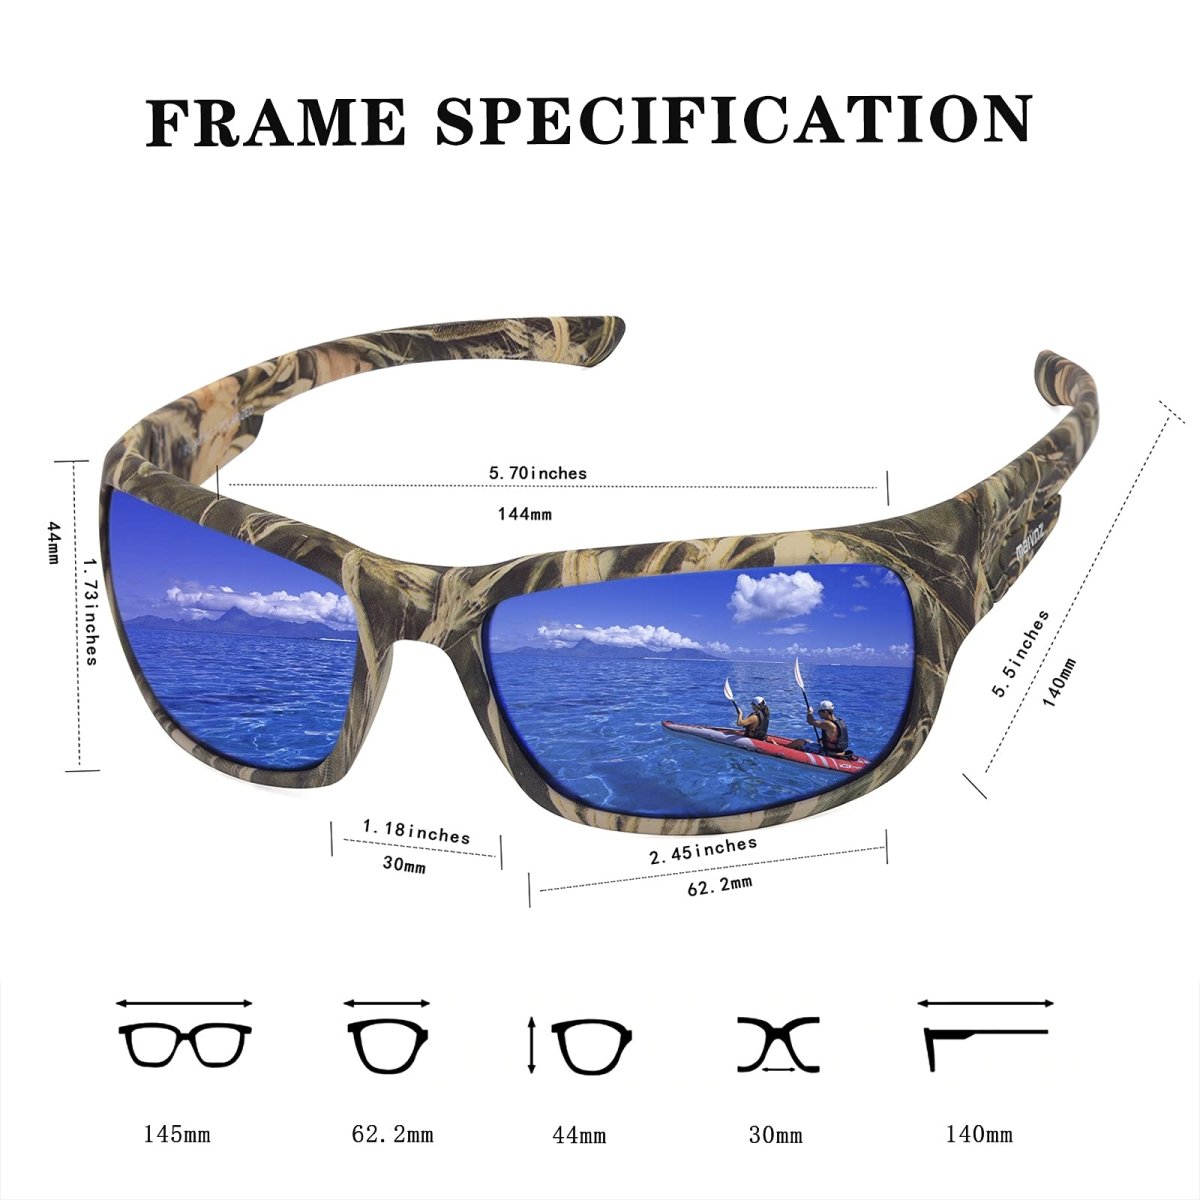 Boys Polarized Fishing Glasses - Blue Camo